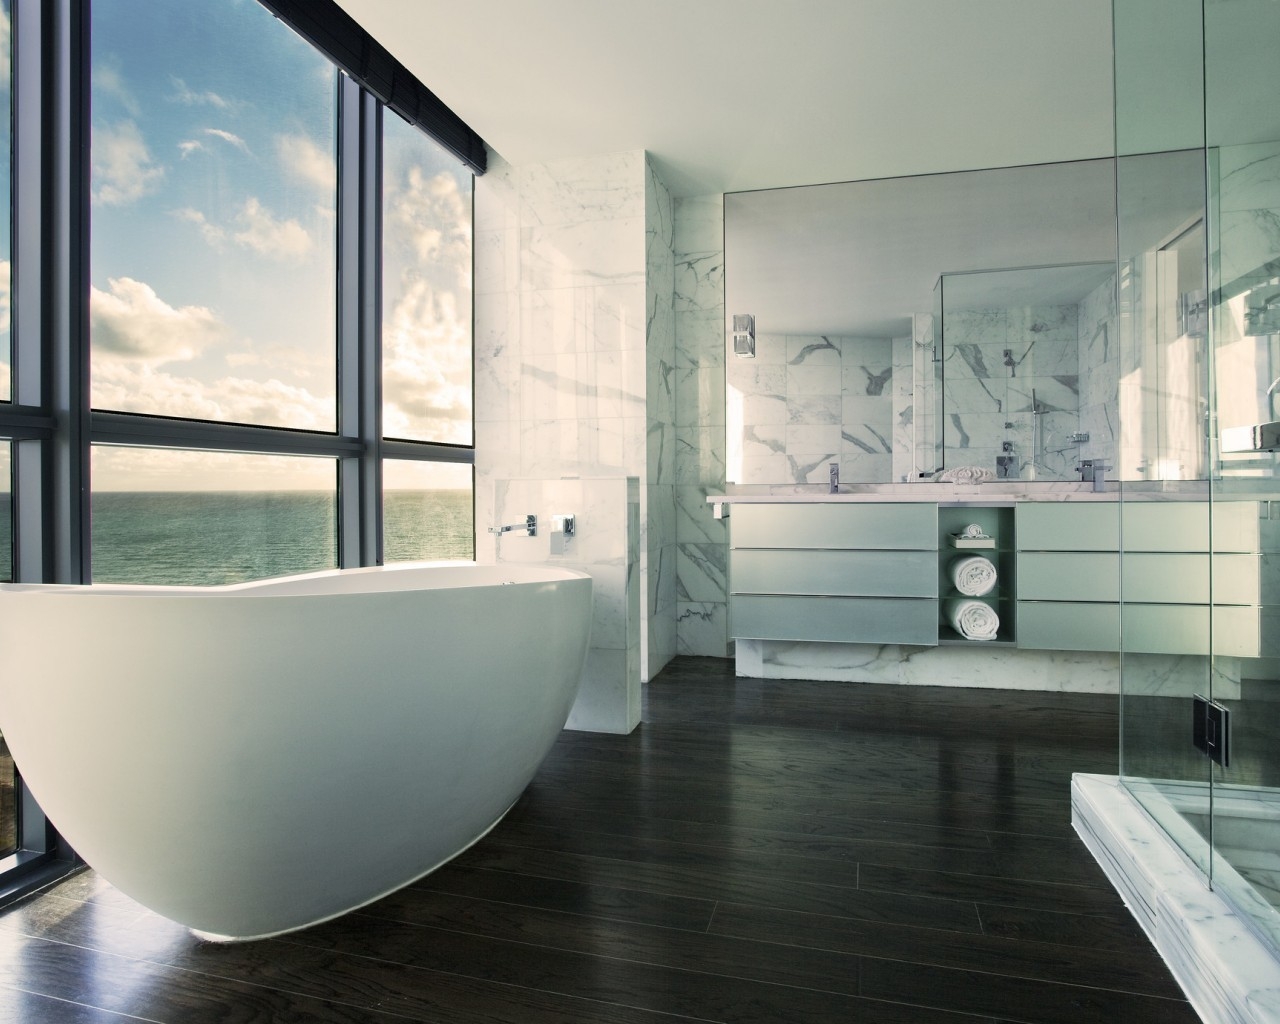 Coll Bathroom Design for 1280 x 1024 resolution